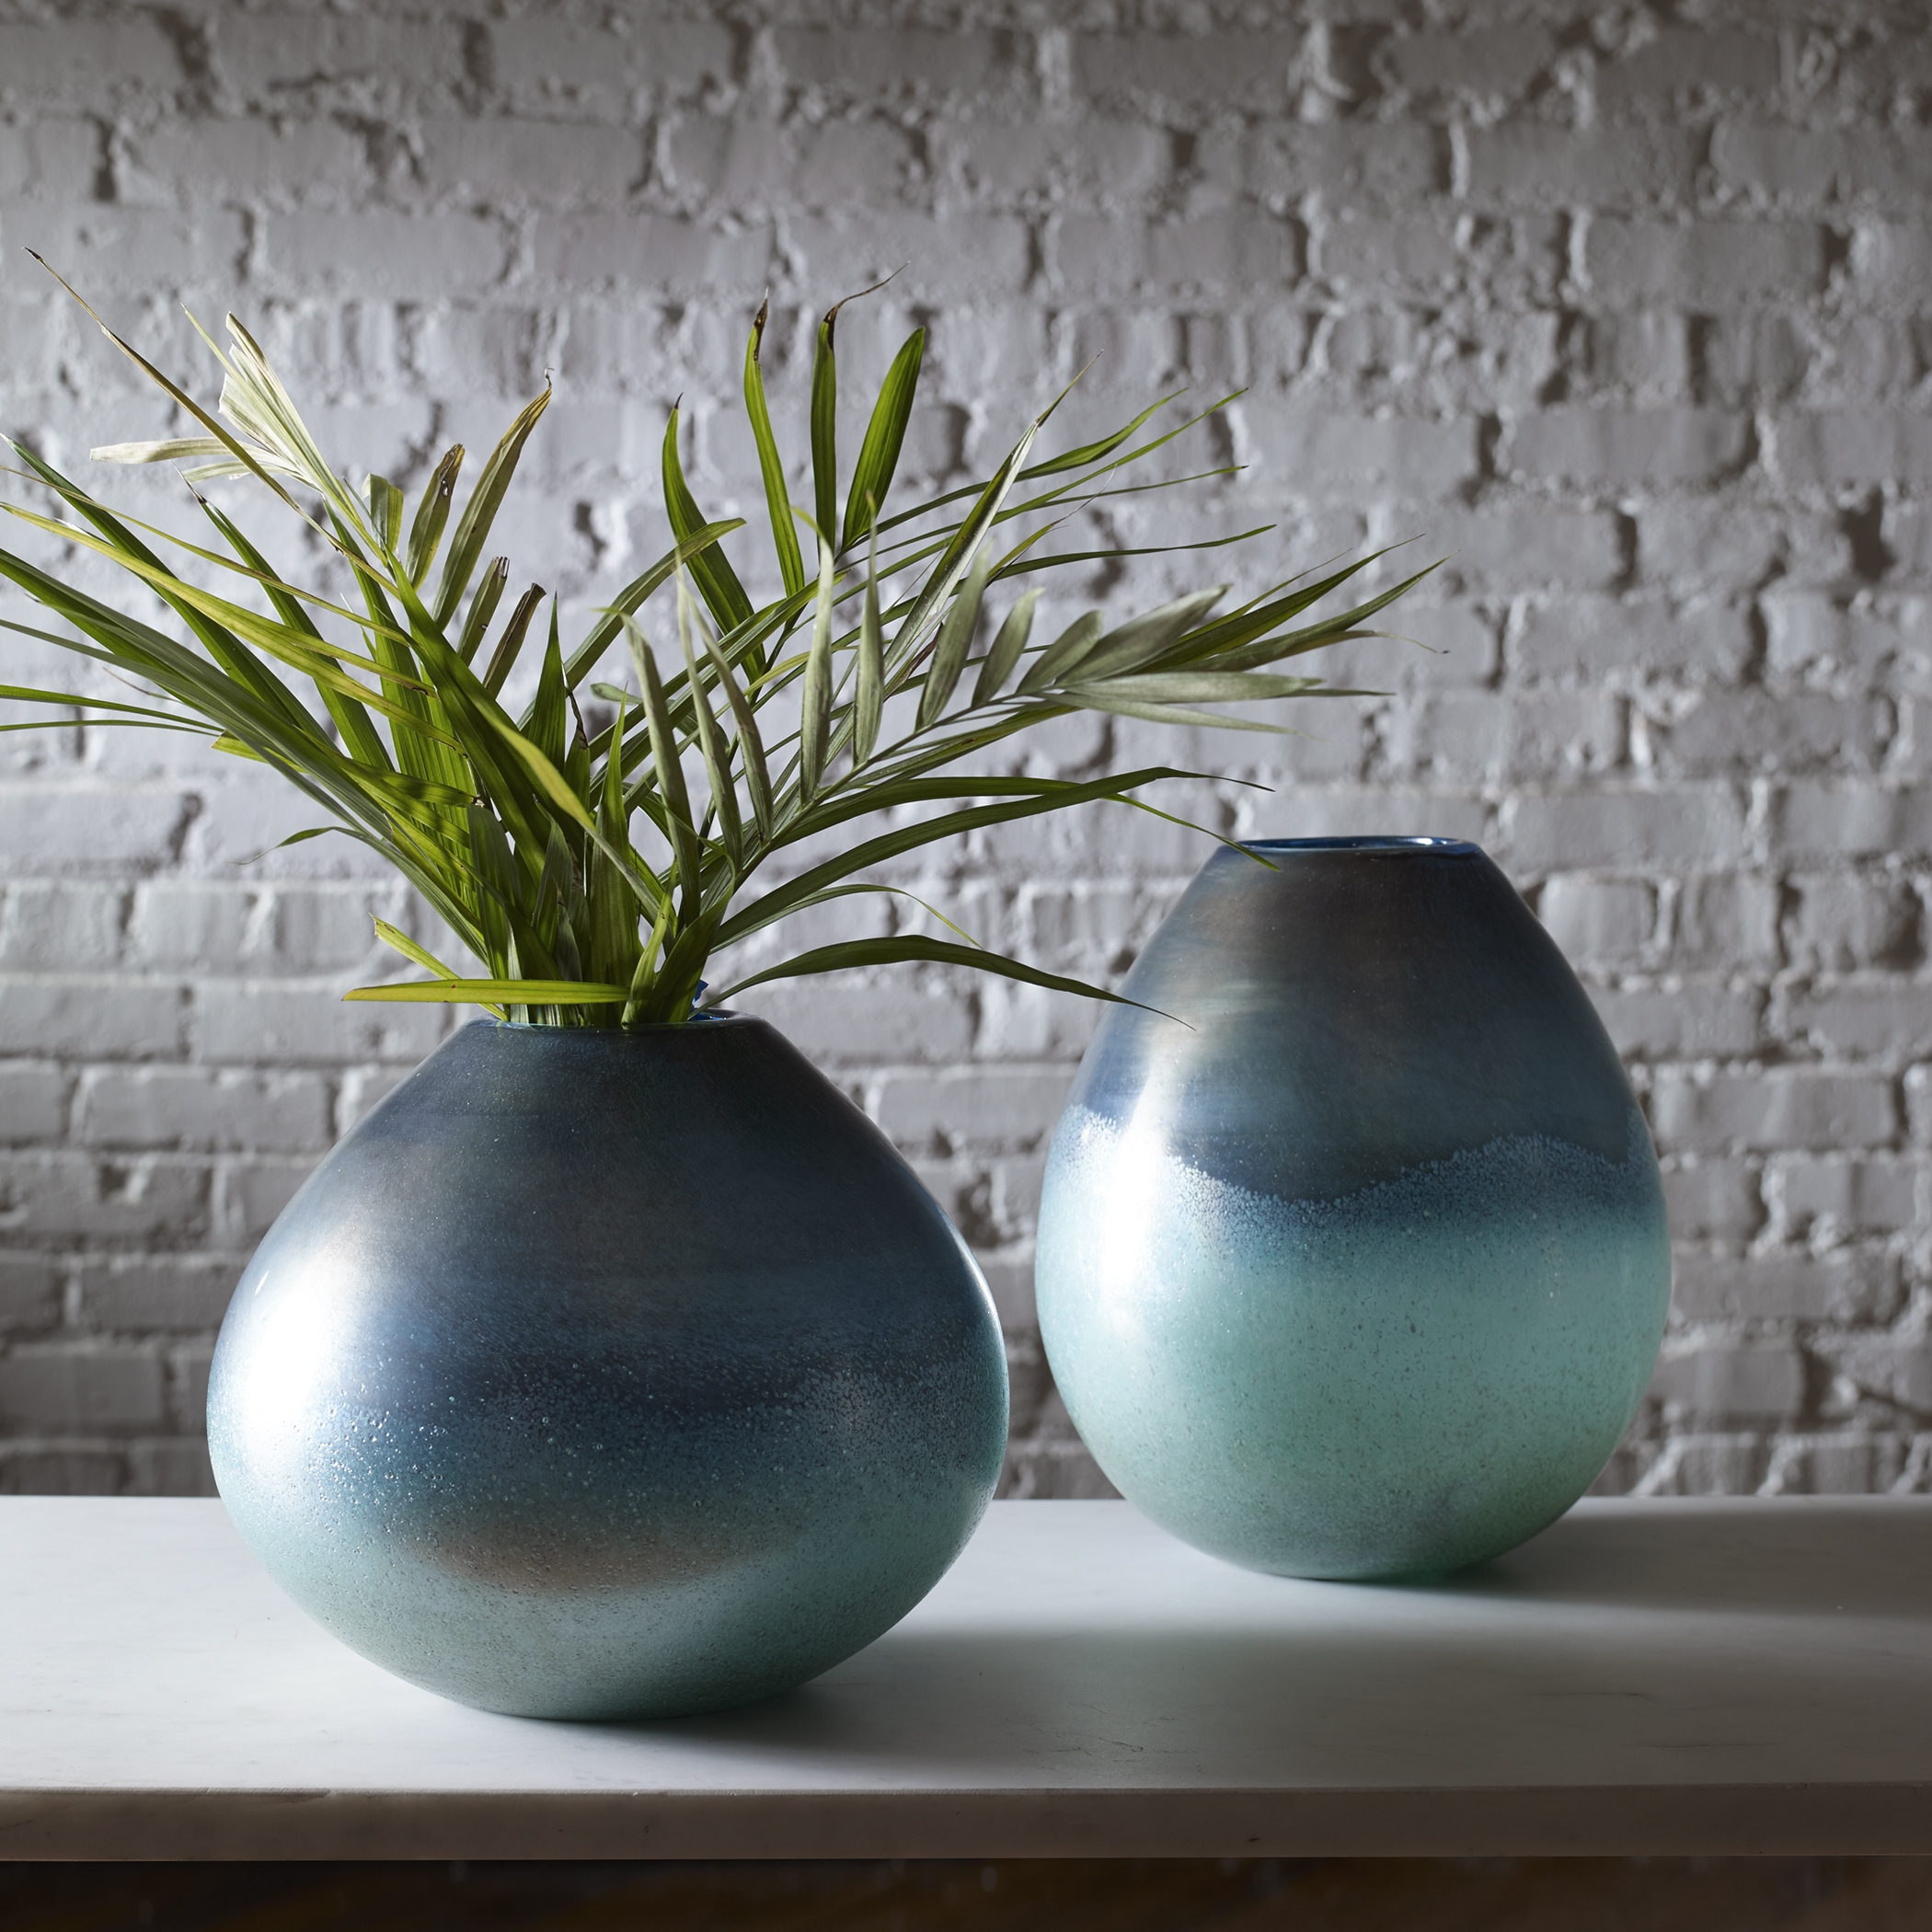 Rian Aqua Bronze Vases, S/2 - Image 0